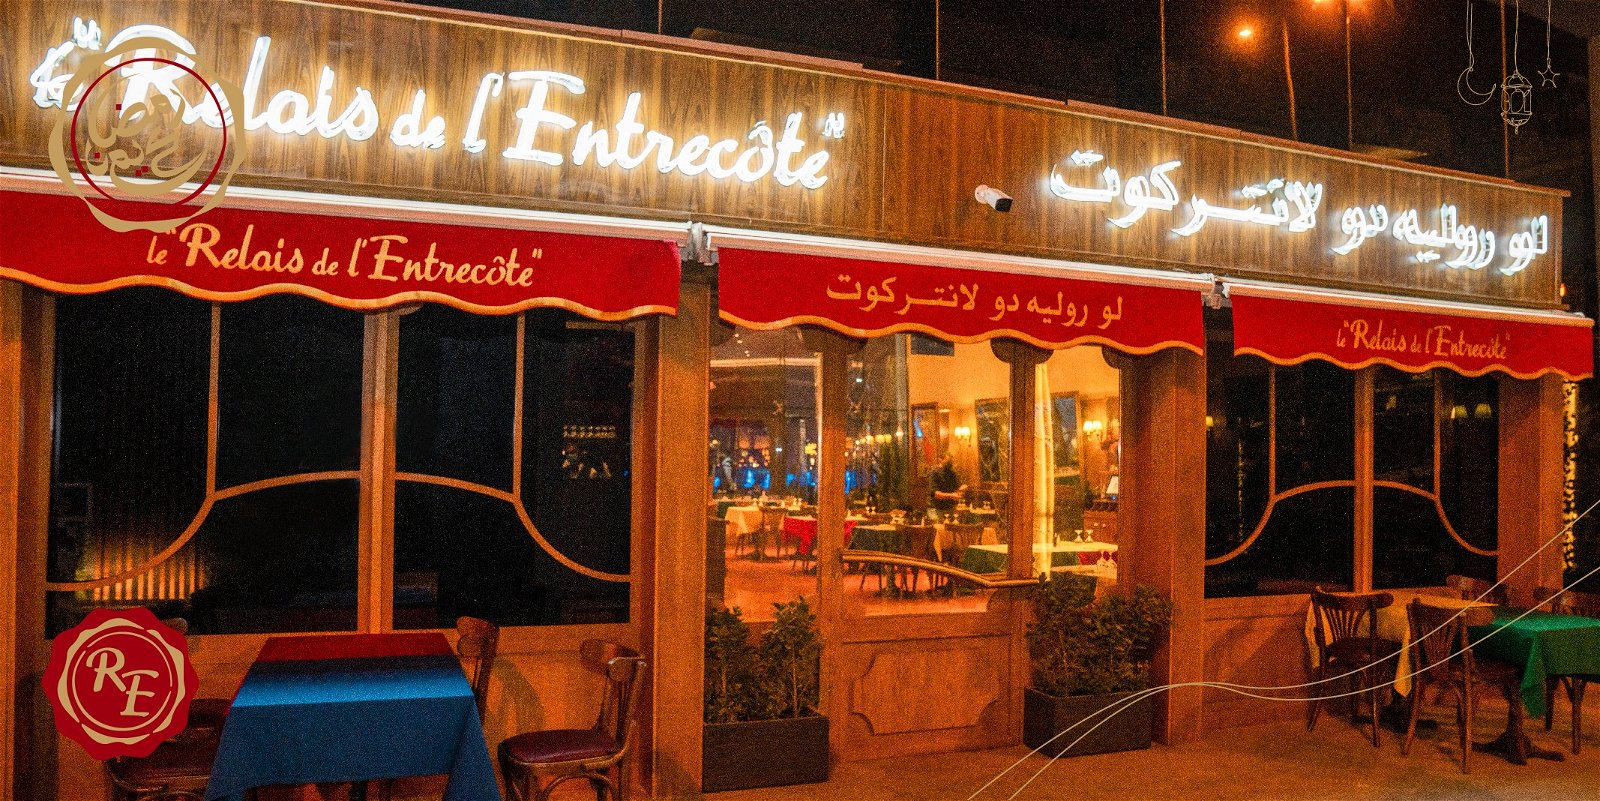 مطعم Le Rolle de Lantrecote من أفضل مطاعم بوليفارد موسم الرياض